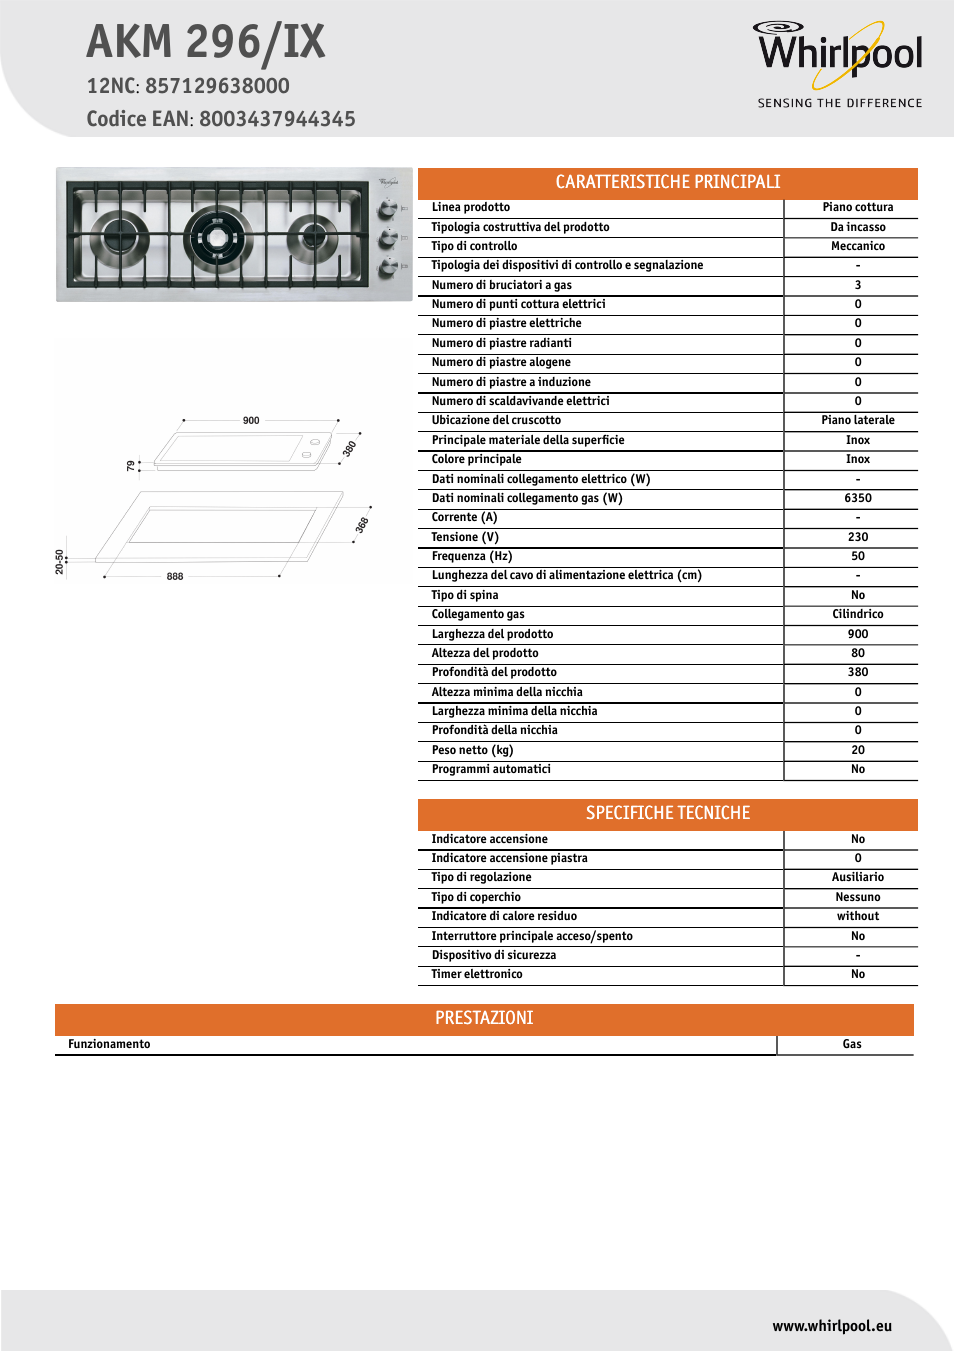 Whirlpool AKM 296-IX Manuale d'uso | Pagine: 1